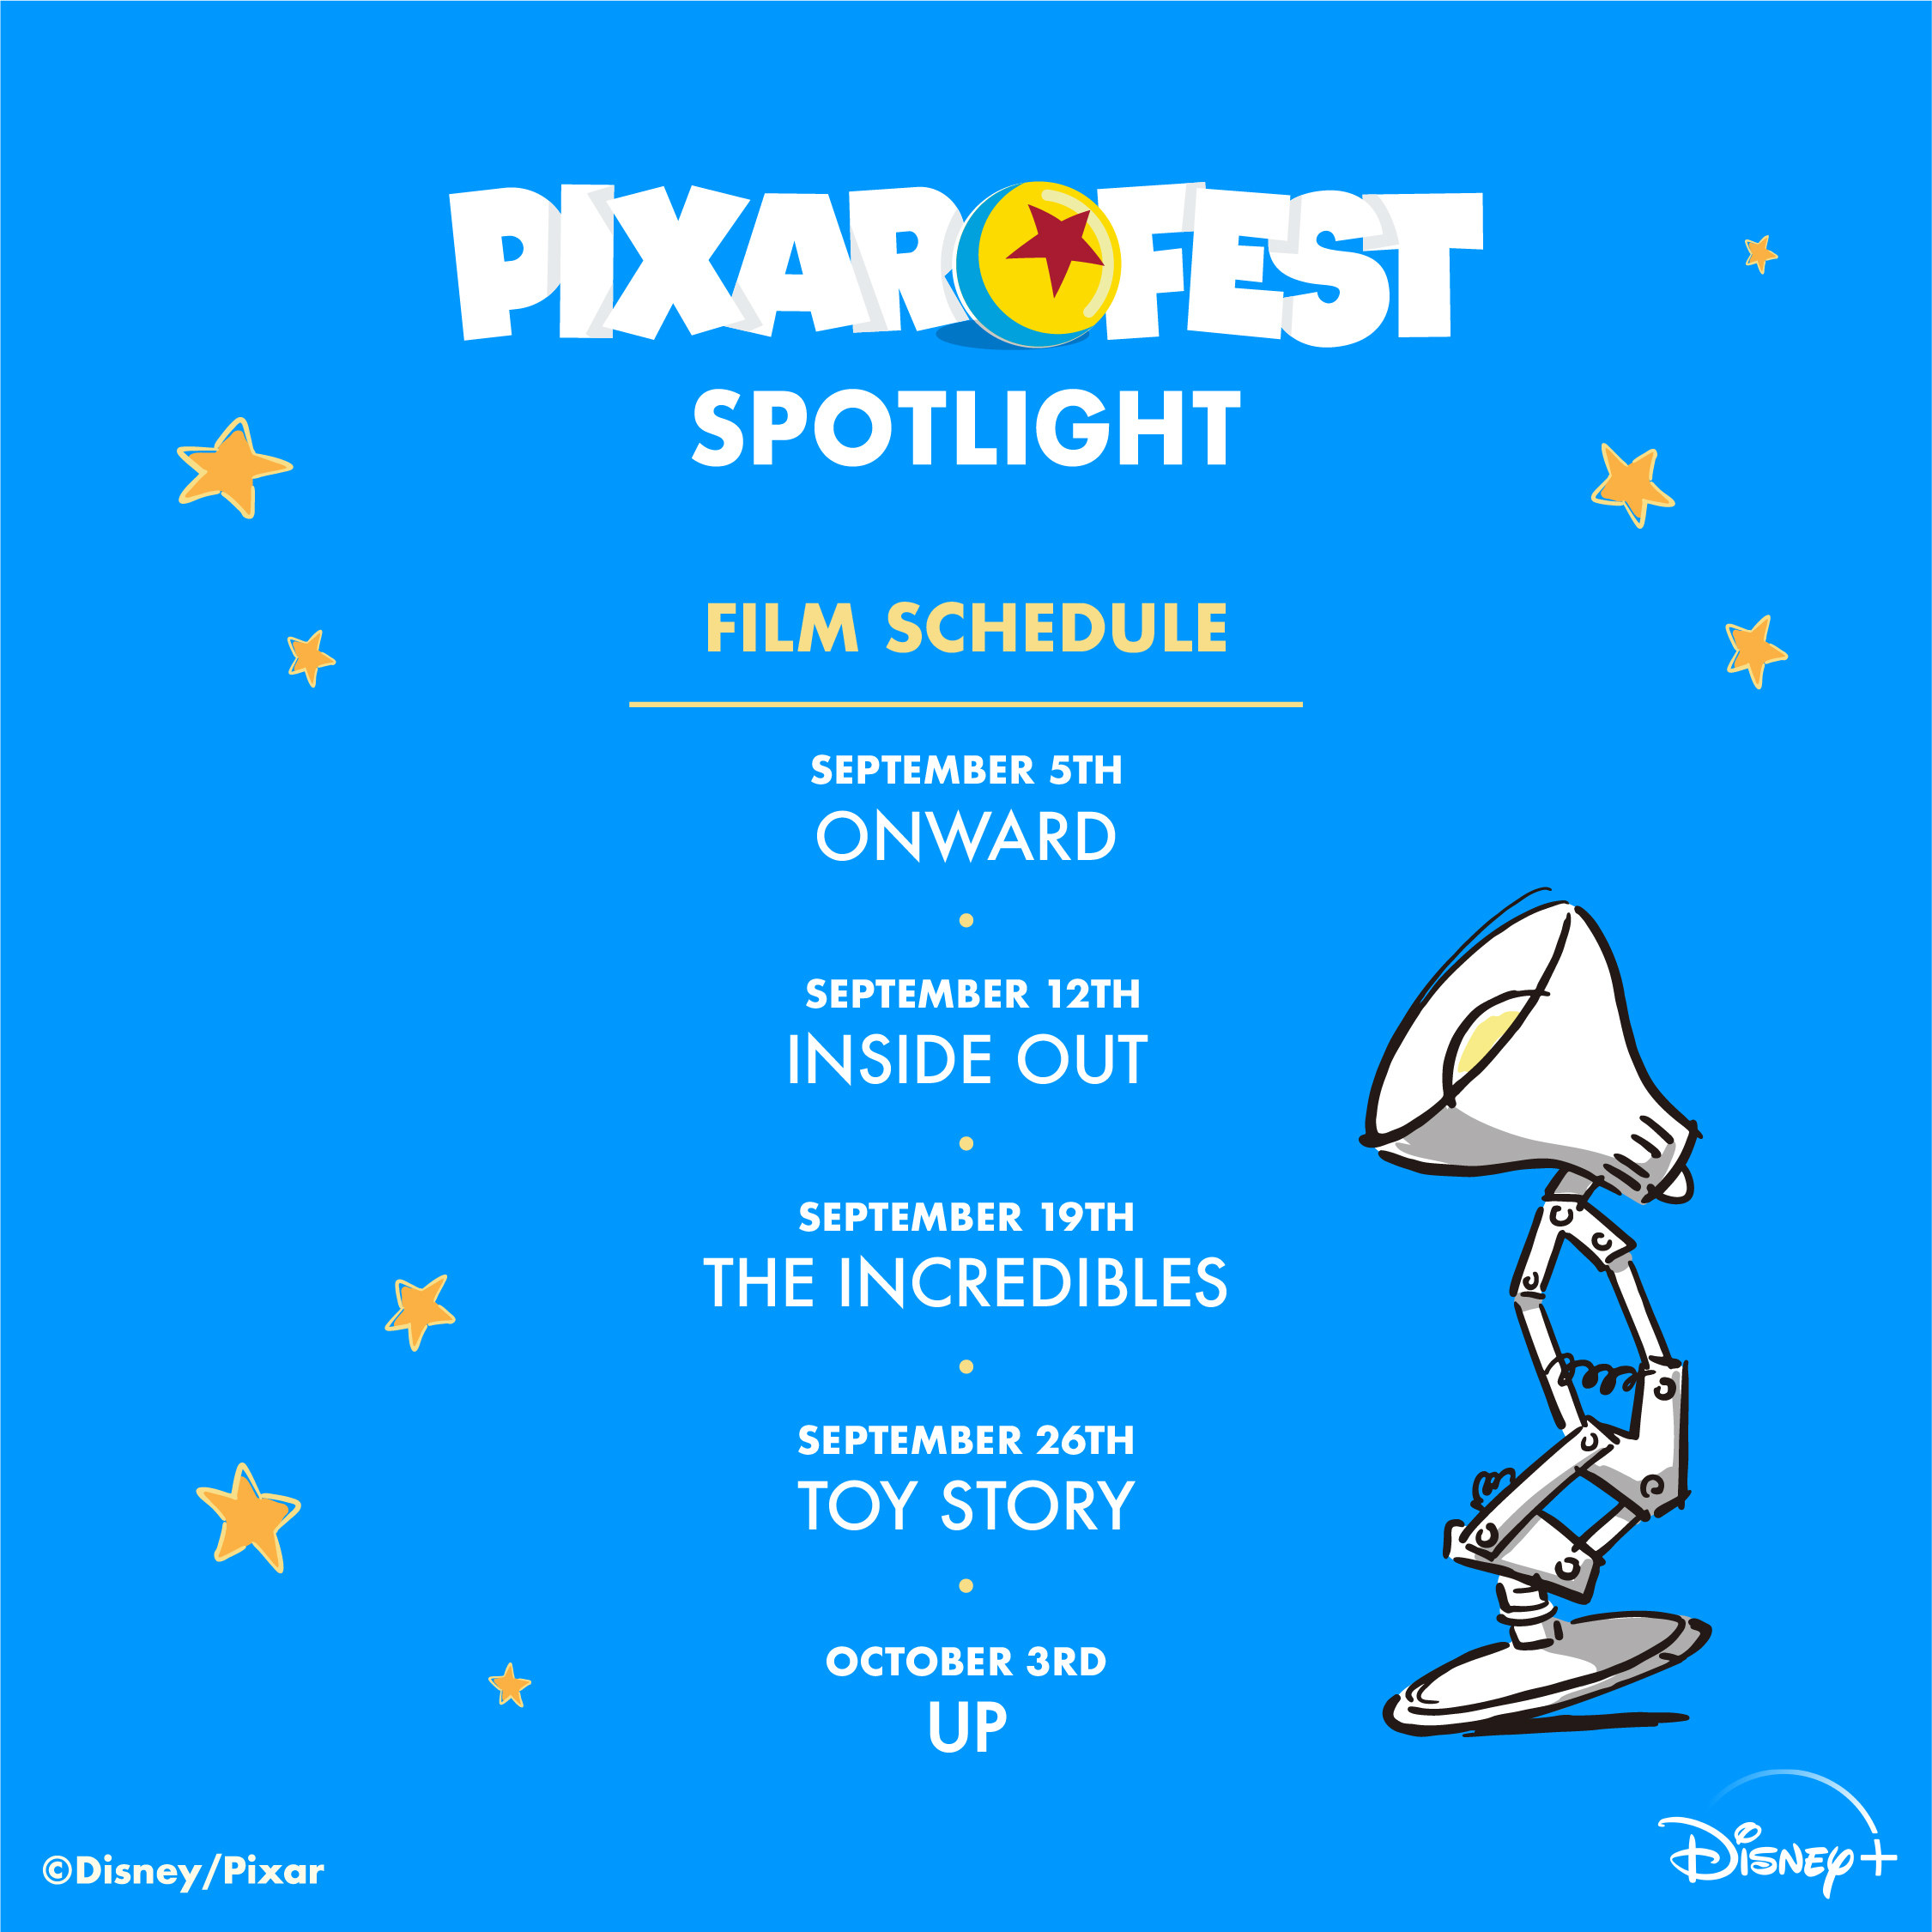 Film Schedule of Pixar movies: &quot;Onward&quot; Sept. 5, &quot;Inside Out&quot; Sept. 12, &quot;The Incredibles&quot; Sept. 19, &quot;Toy Story&quot; Sept. 26, &quot;Up&quot; Oct. 3